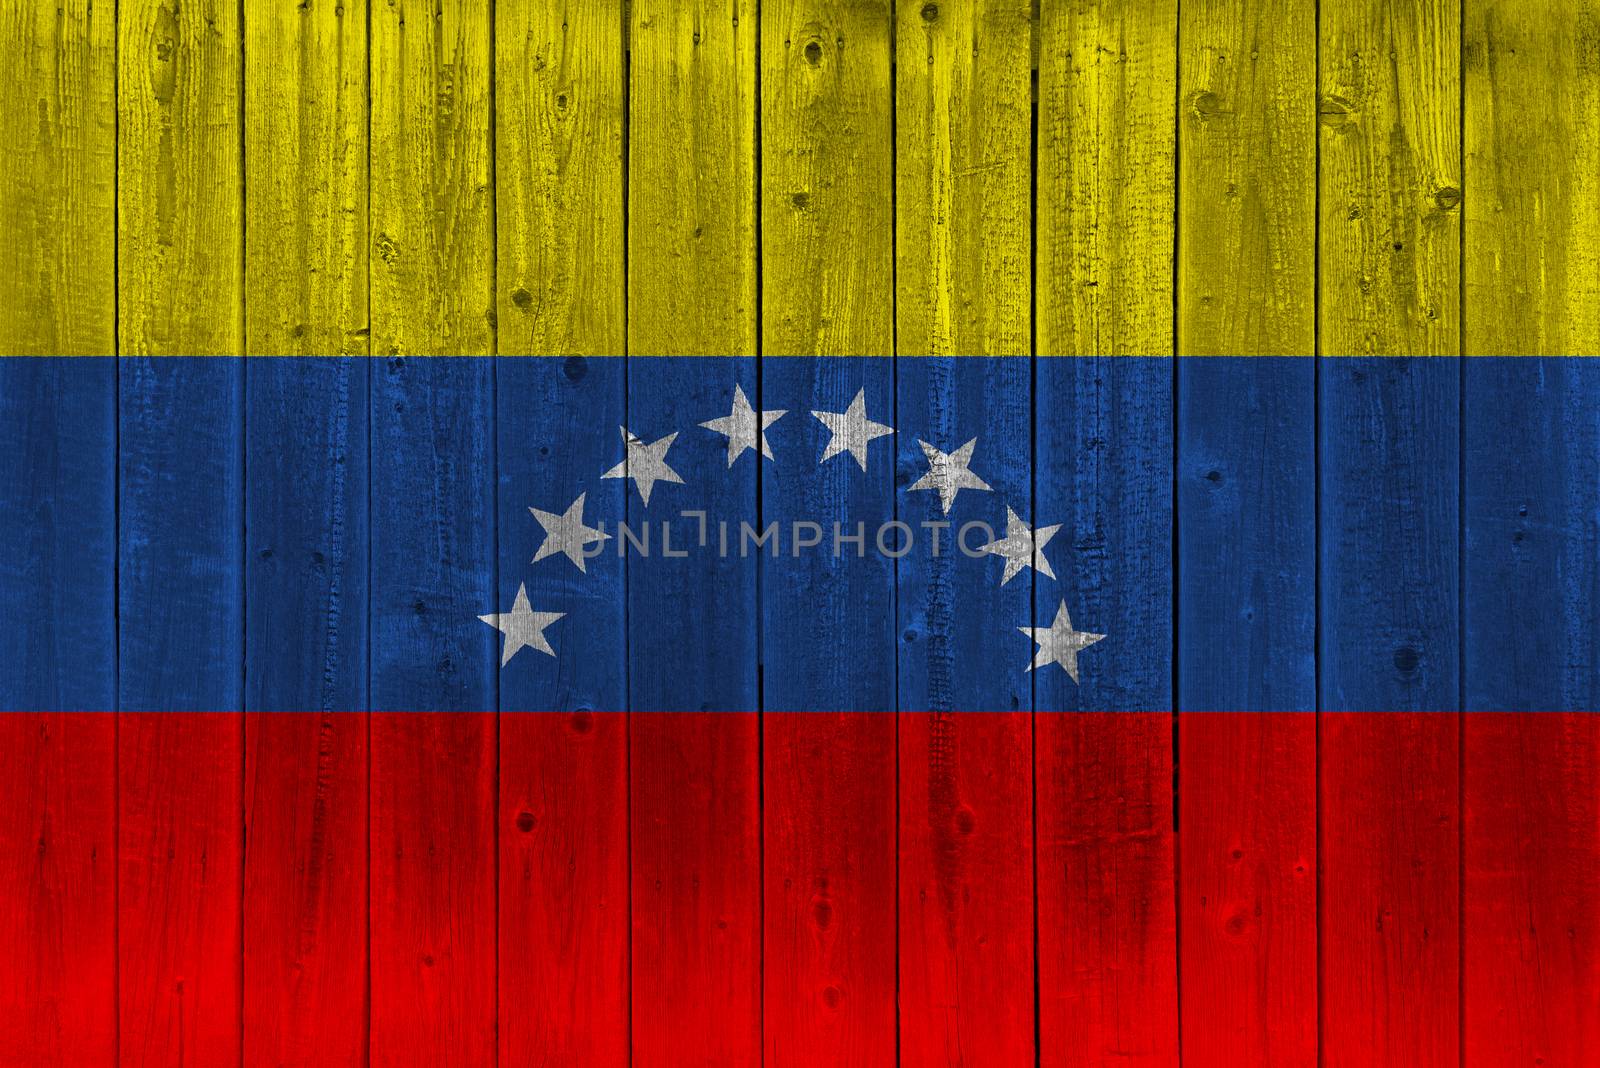 Venezuela flag painted on old wood plank. Patriotic background. National flag of Venezuela